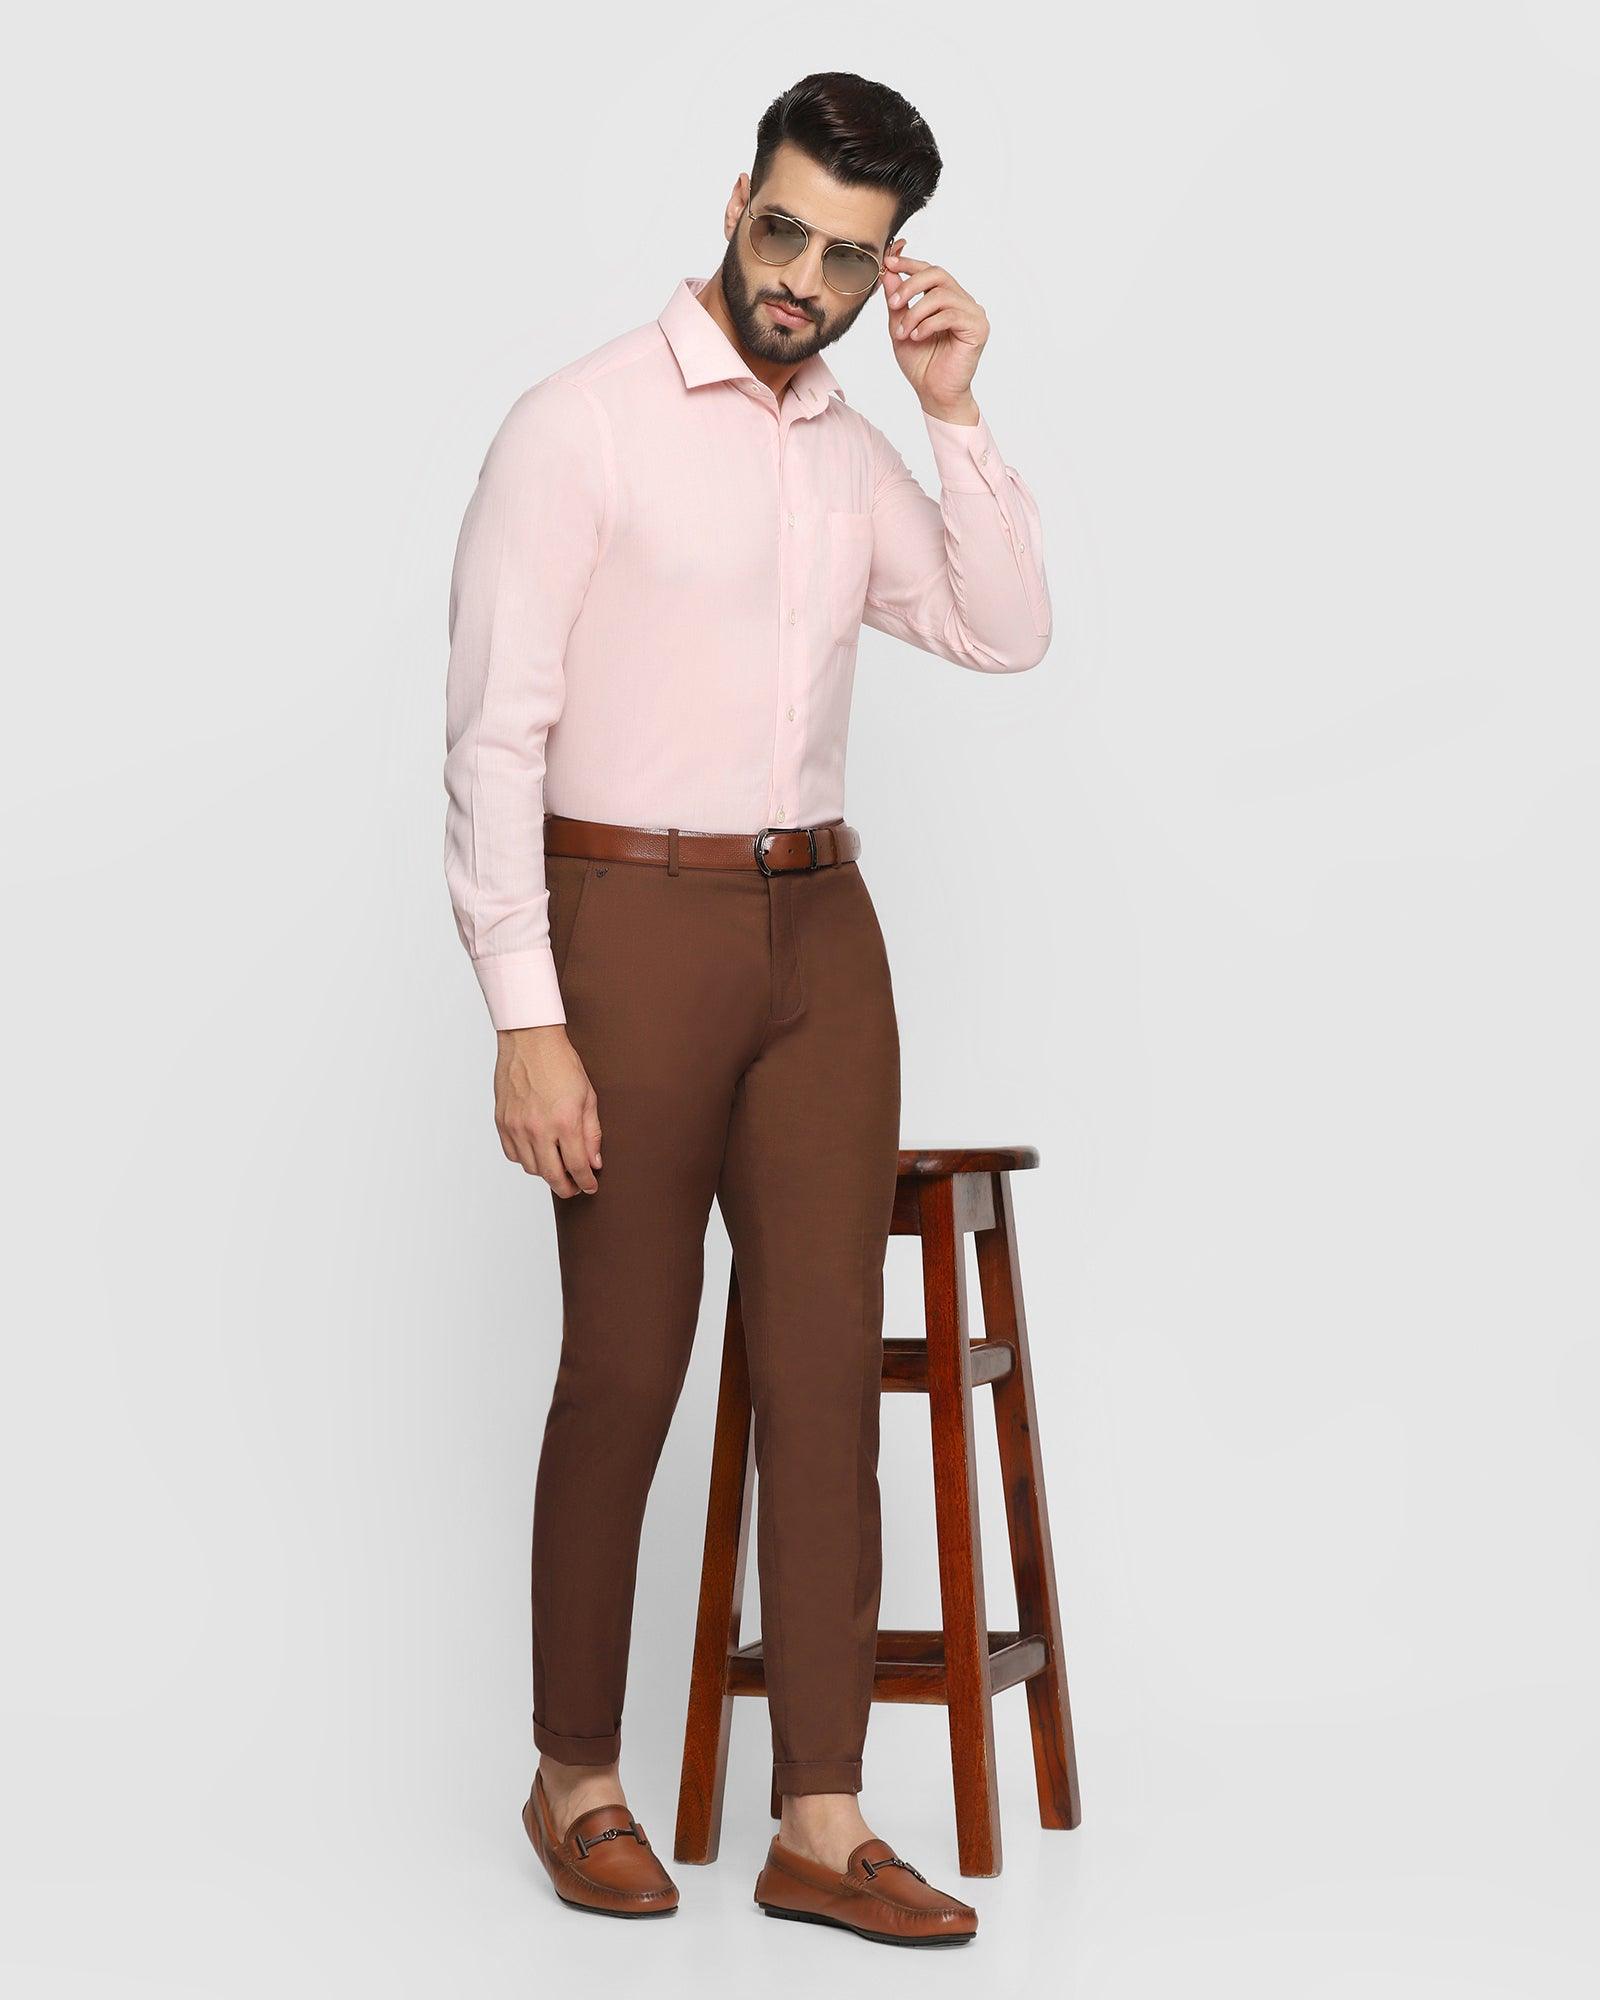 Brown Trousers  Buy Brown Trousers  Brown Pants Online For Men at Best  Prices In India  Flipkartcom